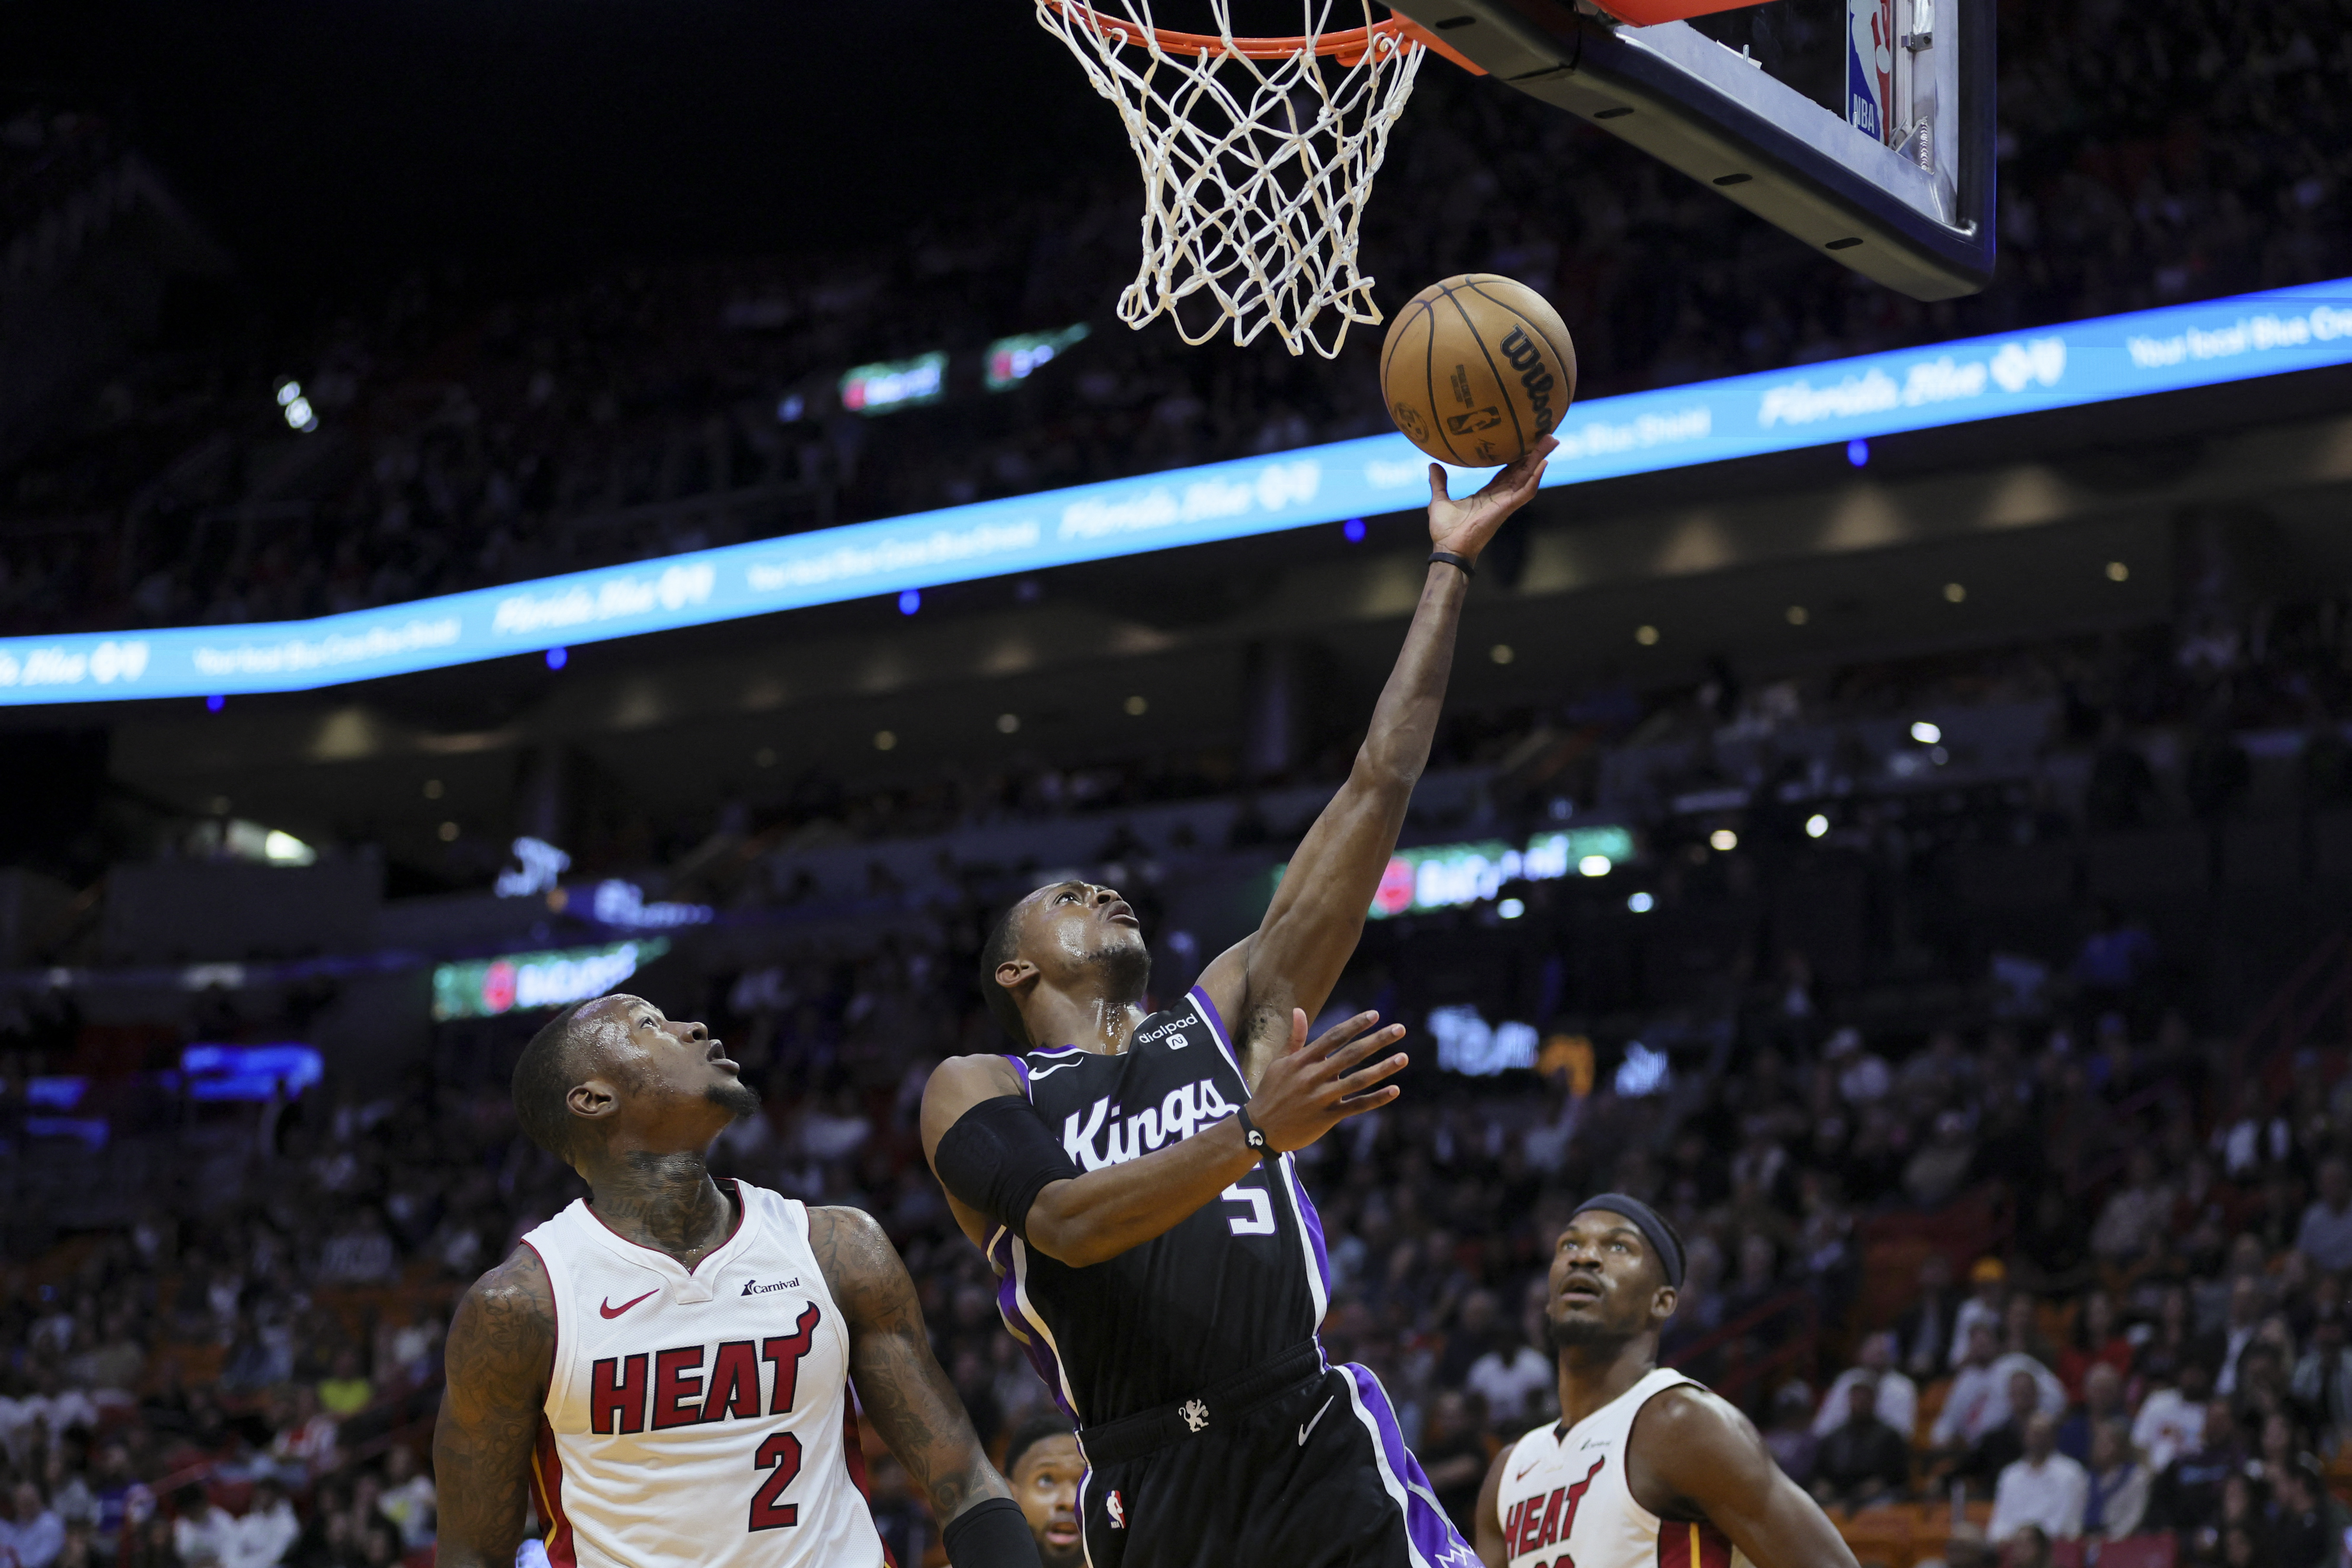 Miami Heat discuss winning ways in wake of losing streak